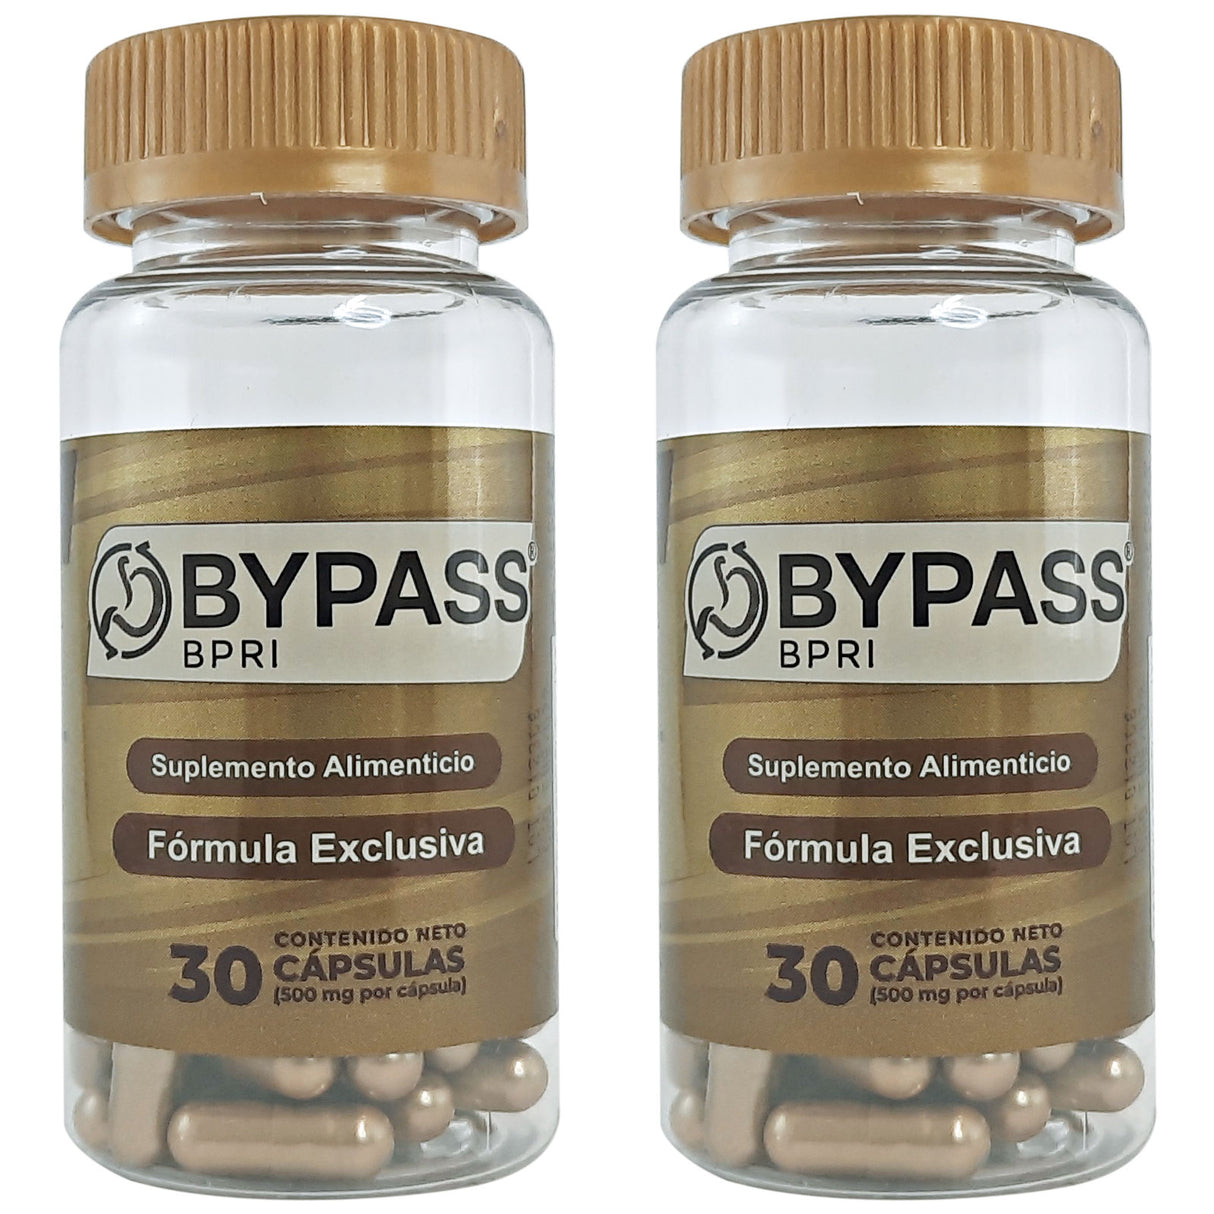 Bypass Bpri 30 capsulas 500 mg - Perdida de Peso Natural